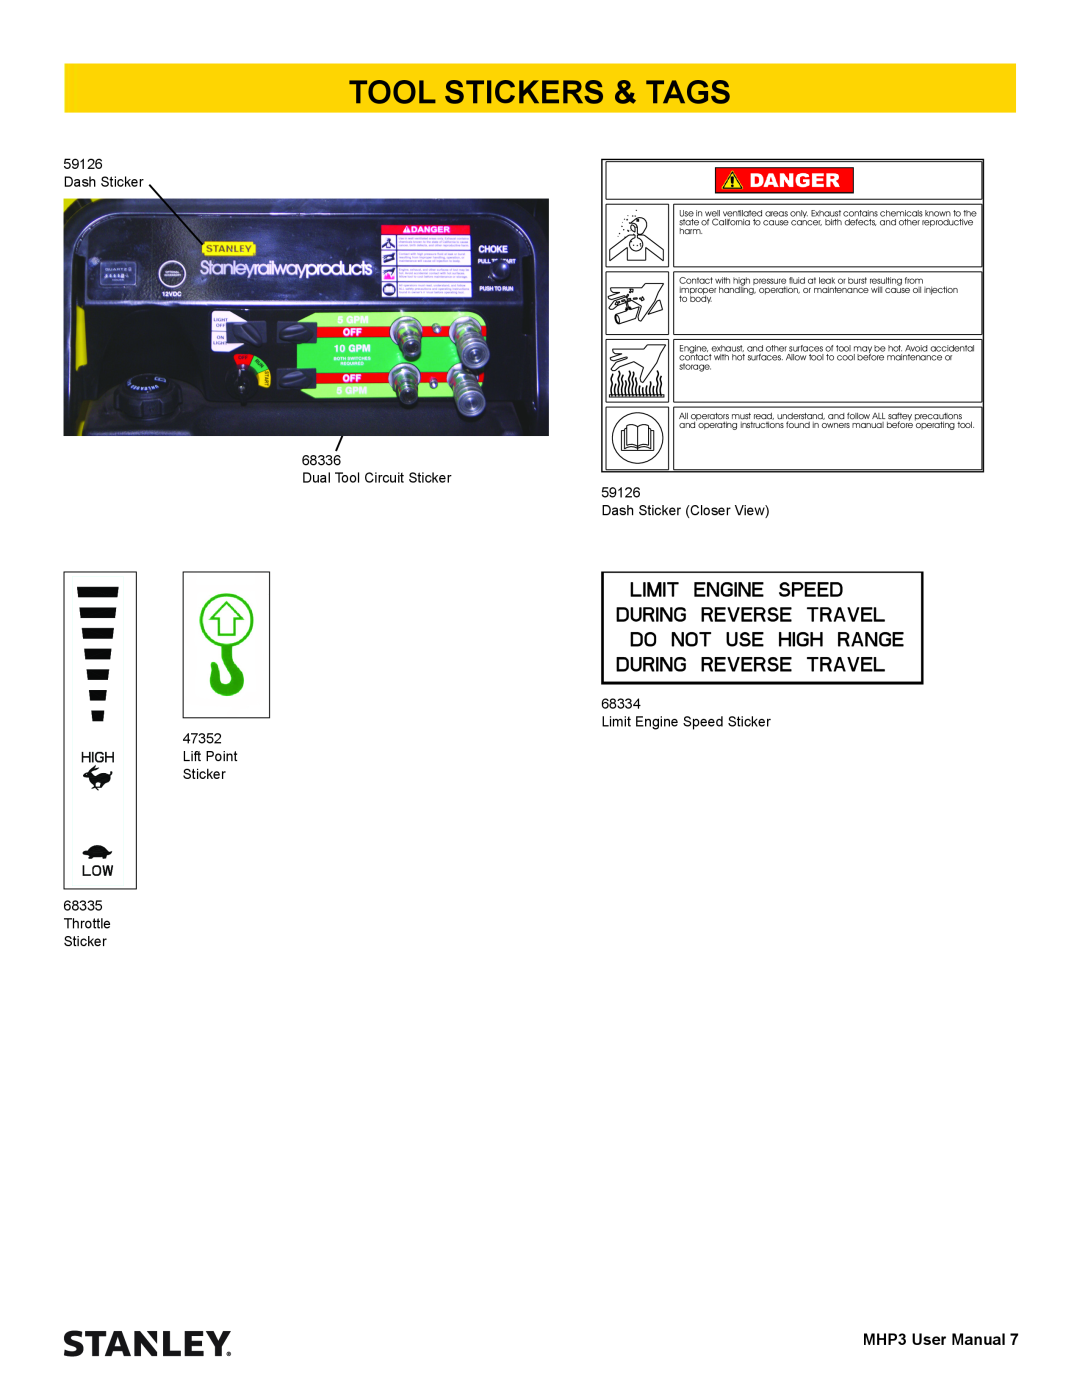 Stanley Black & Decker MHP3 user manual Tool Stickers & Tags, Dash Sticker 47352 Lift Point Sticker 68335 Throttle Sticker 